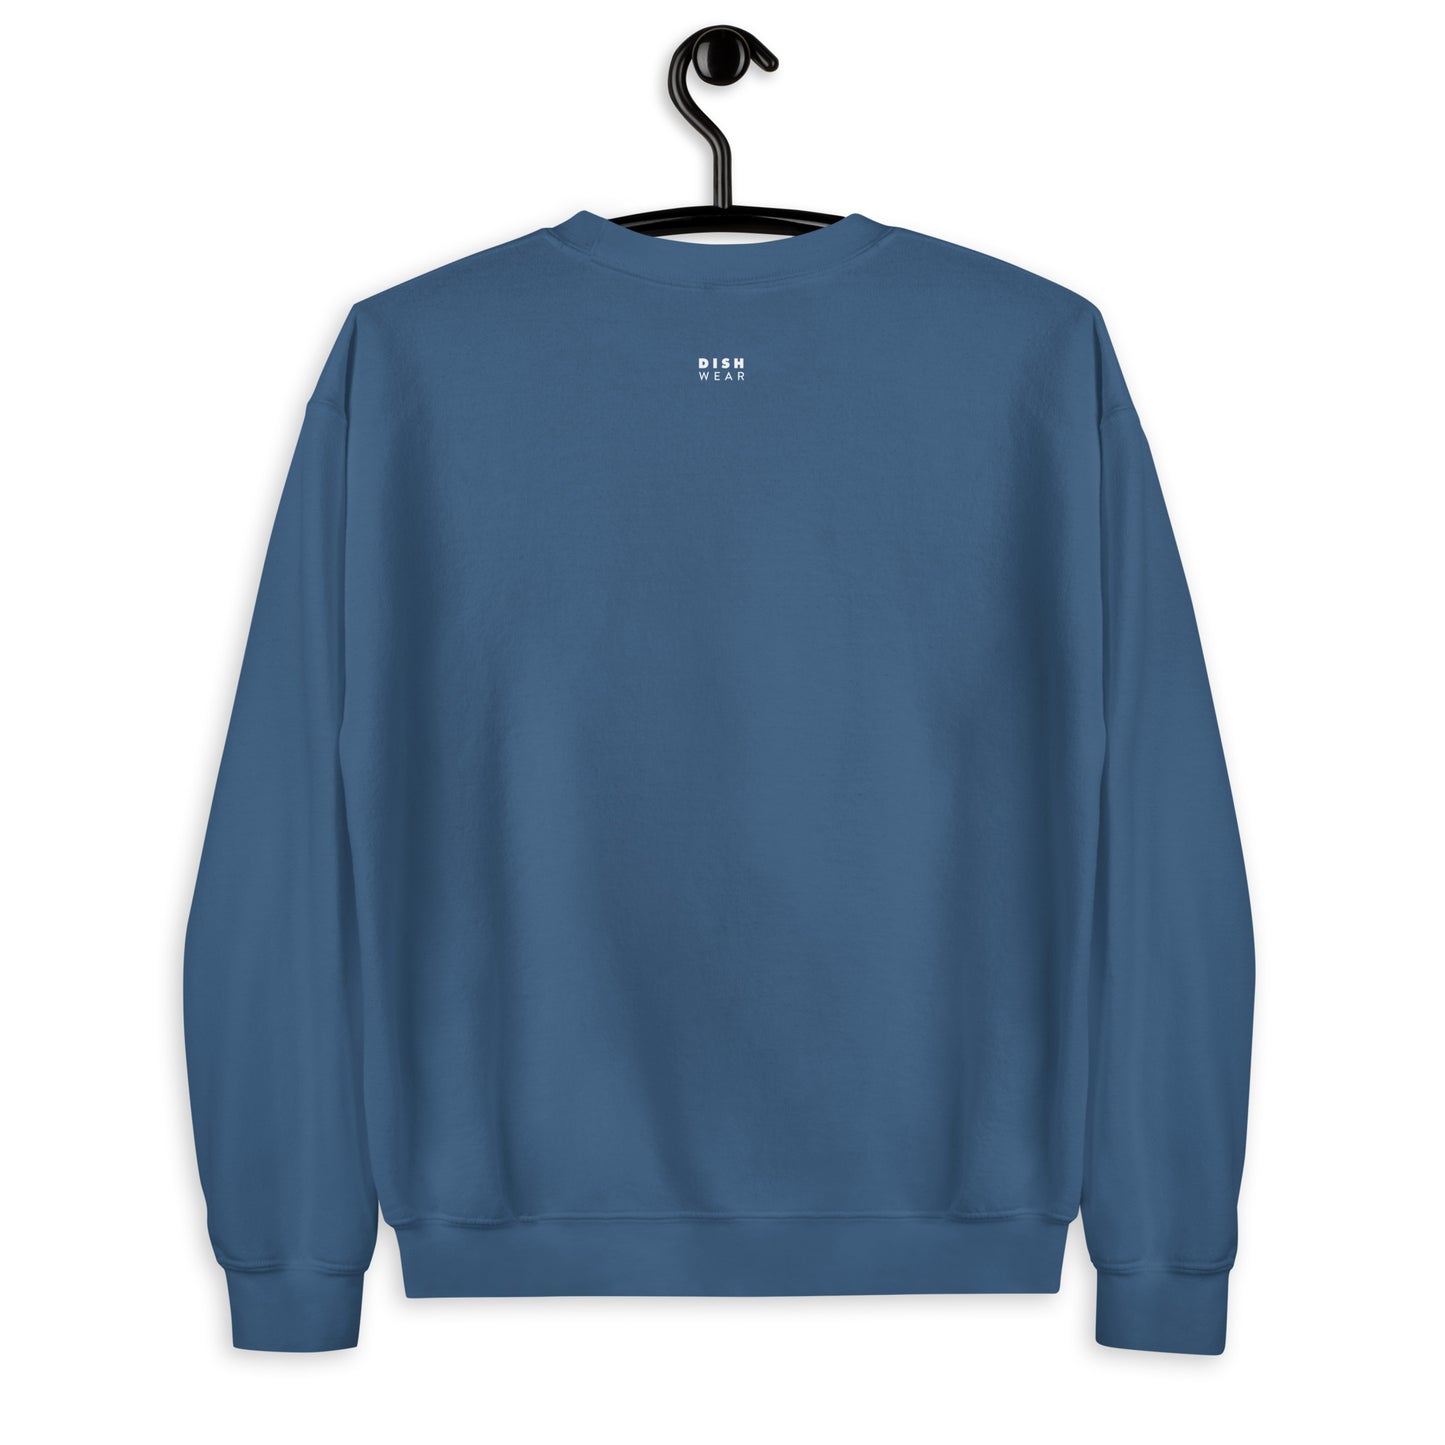 Crouton Sweatshirt - Arched Font